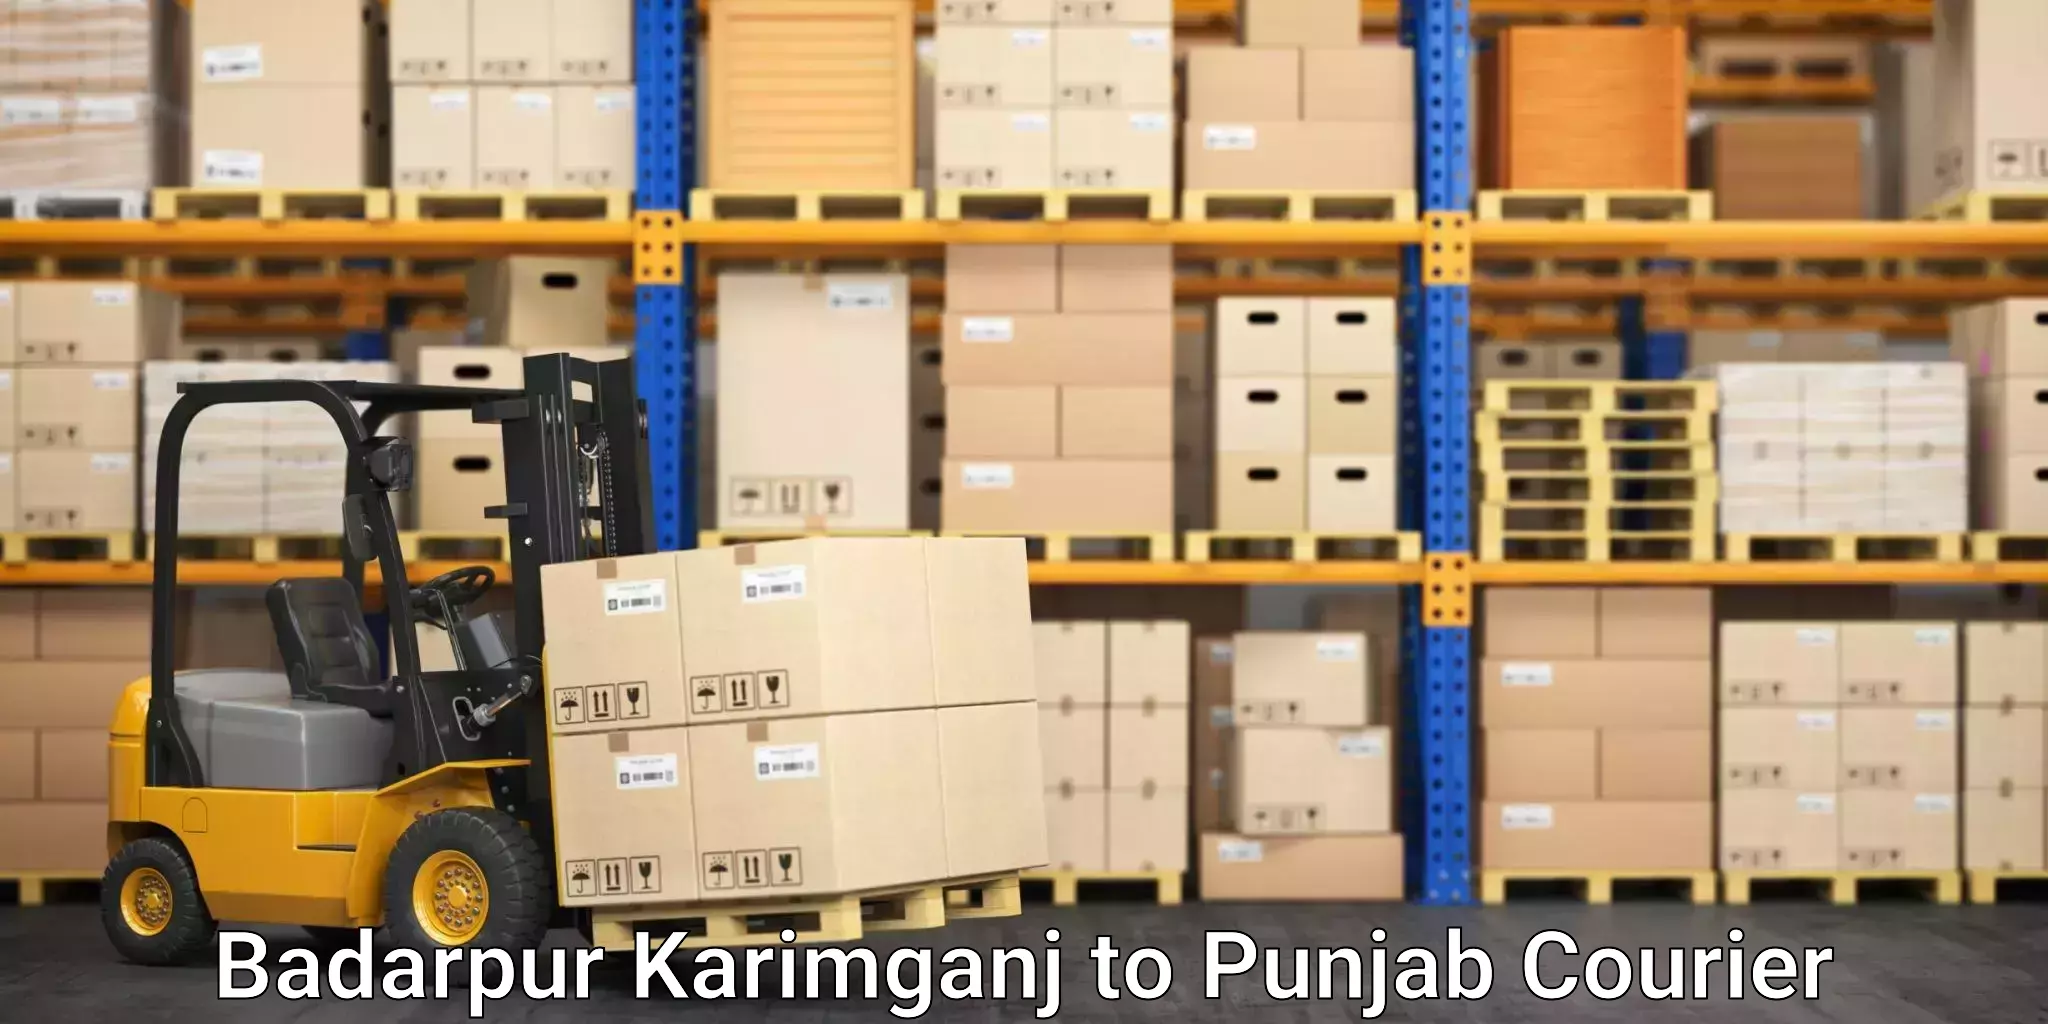 Streamlined delivery processes Badarpur Karimganj to Dinanagar